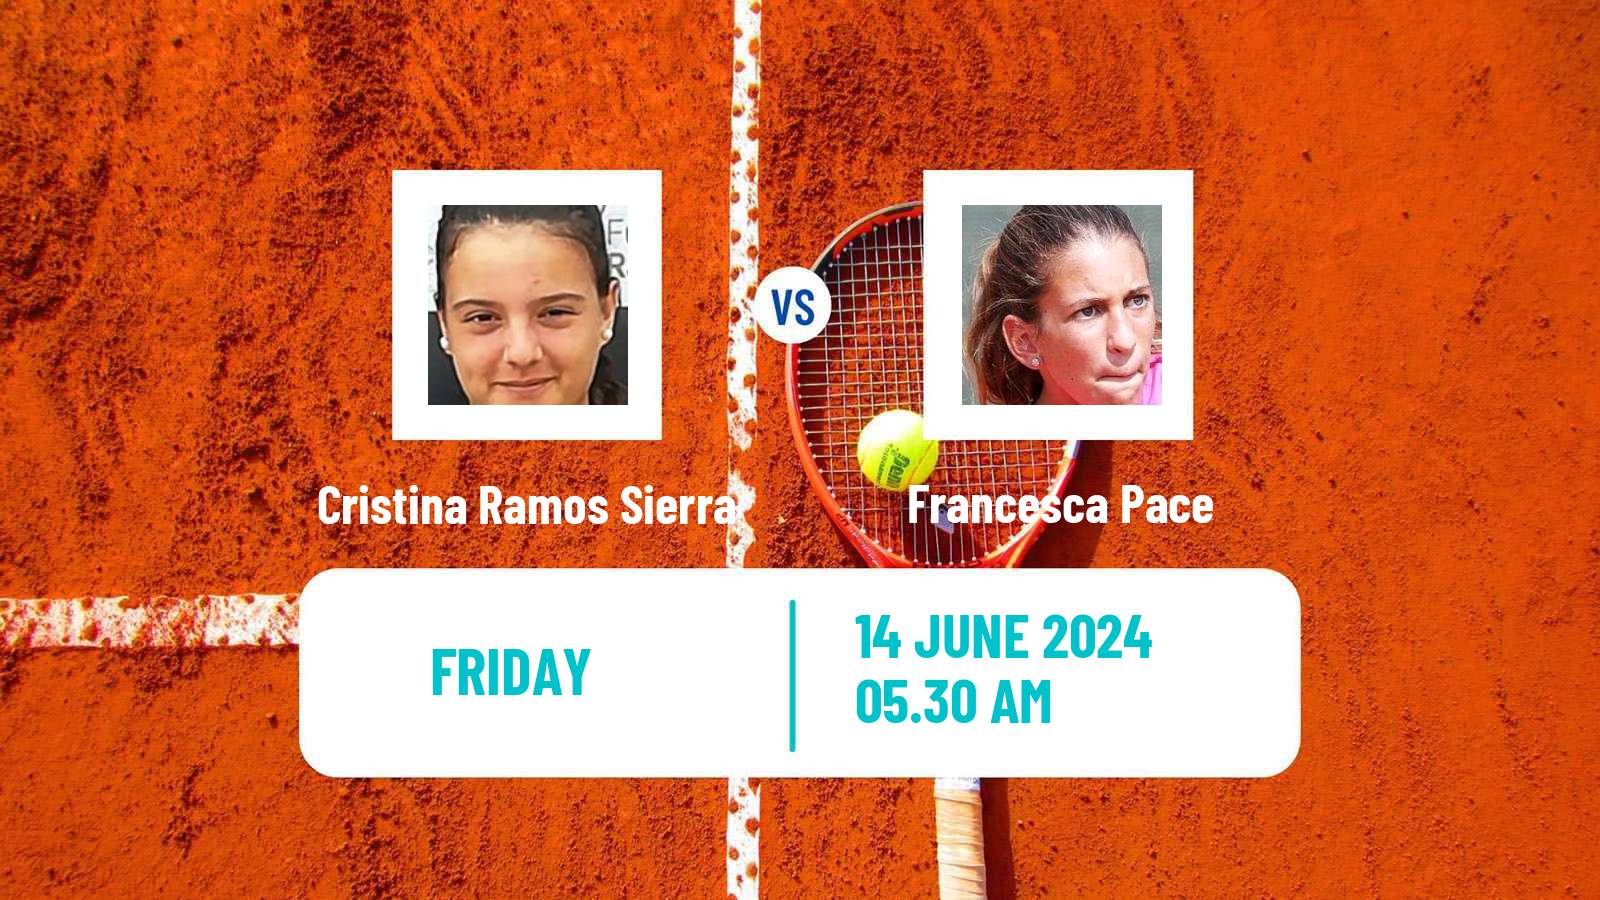 Tennis ITF W15 Madrid 2 Women Cristina Ramos Sierra - Francesca Pace